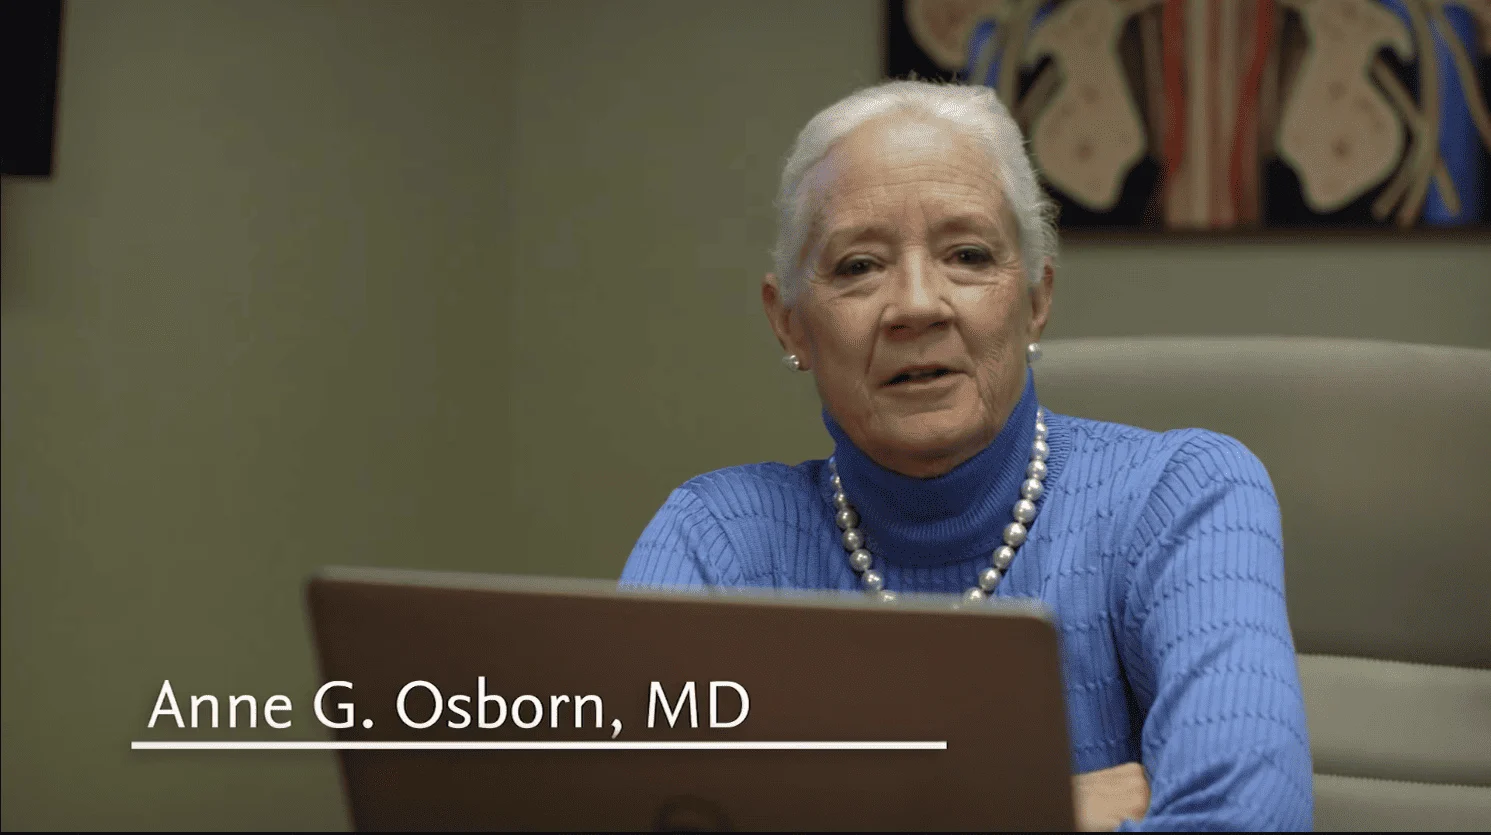 Dr. Anne G. Osborn